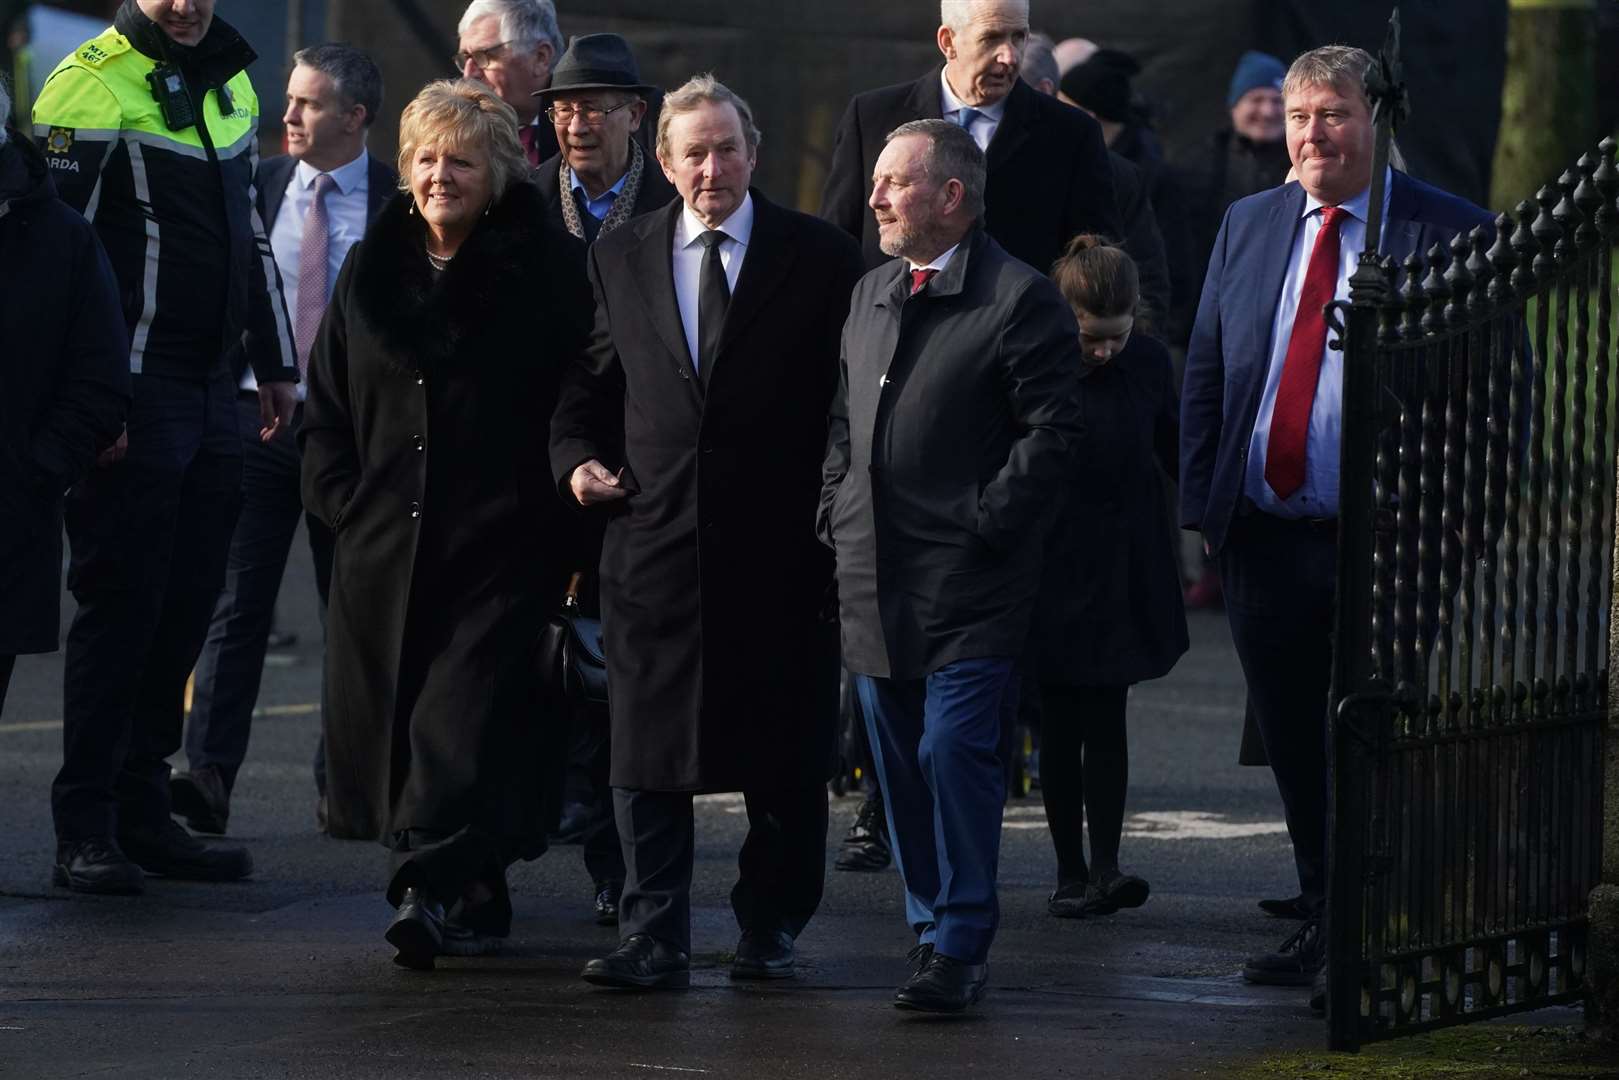 Former taoiseach Enda Kenny said John Brunton’s death marks the passing of an era